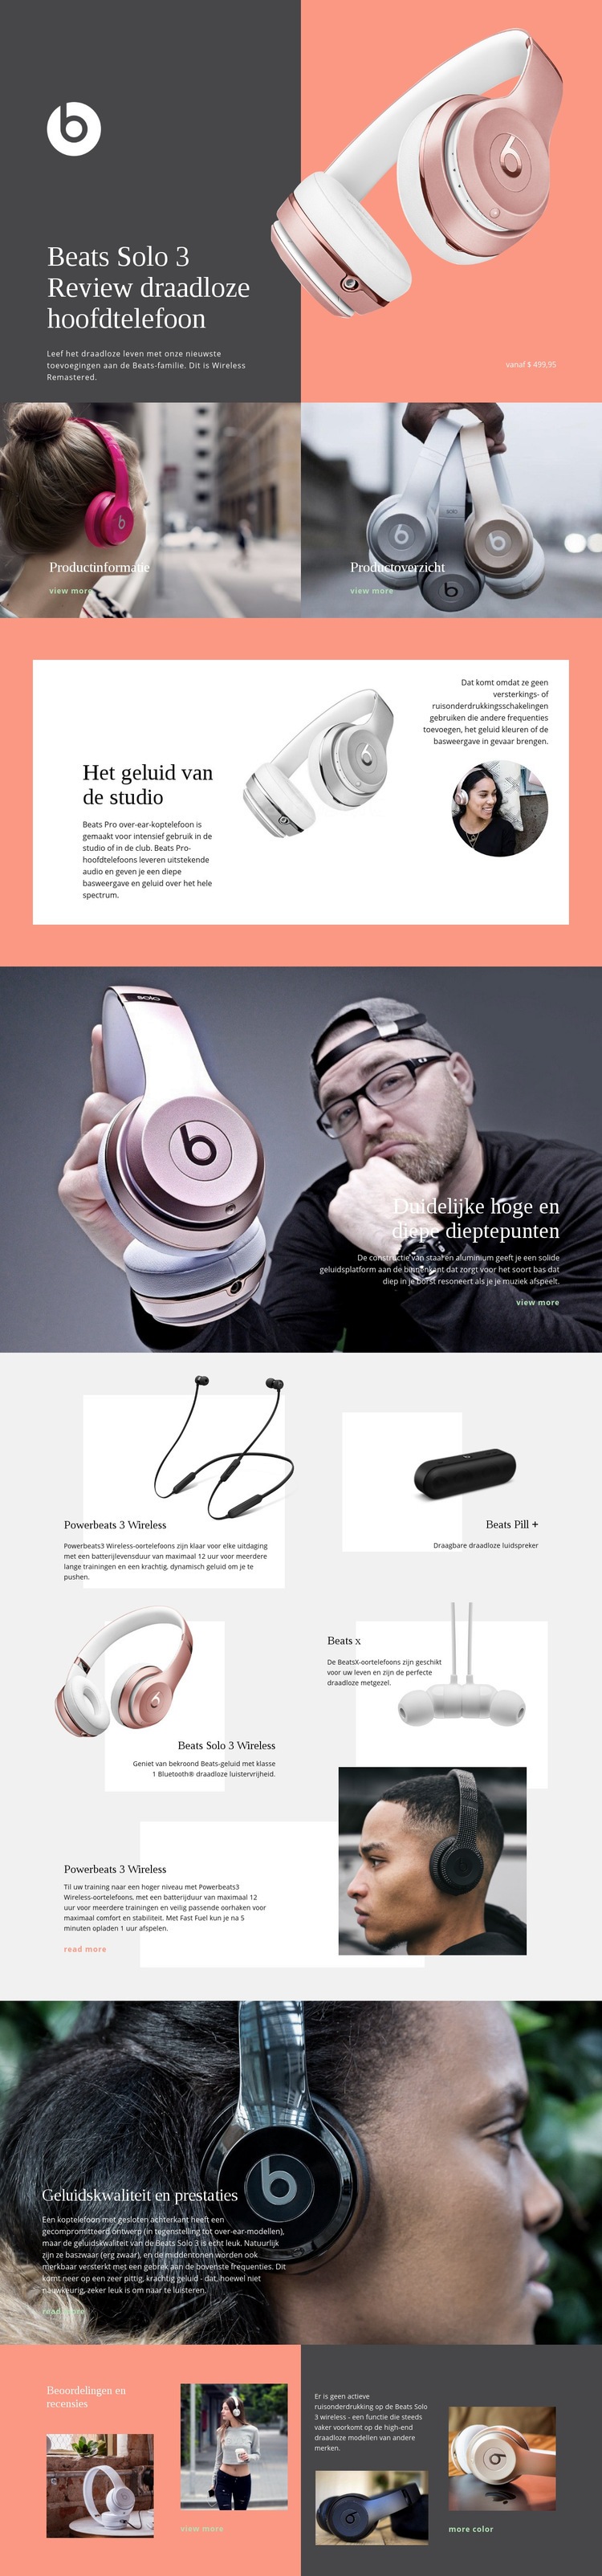 Beats Wireless Website ontwerp